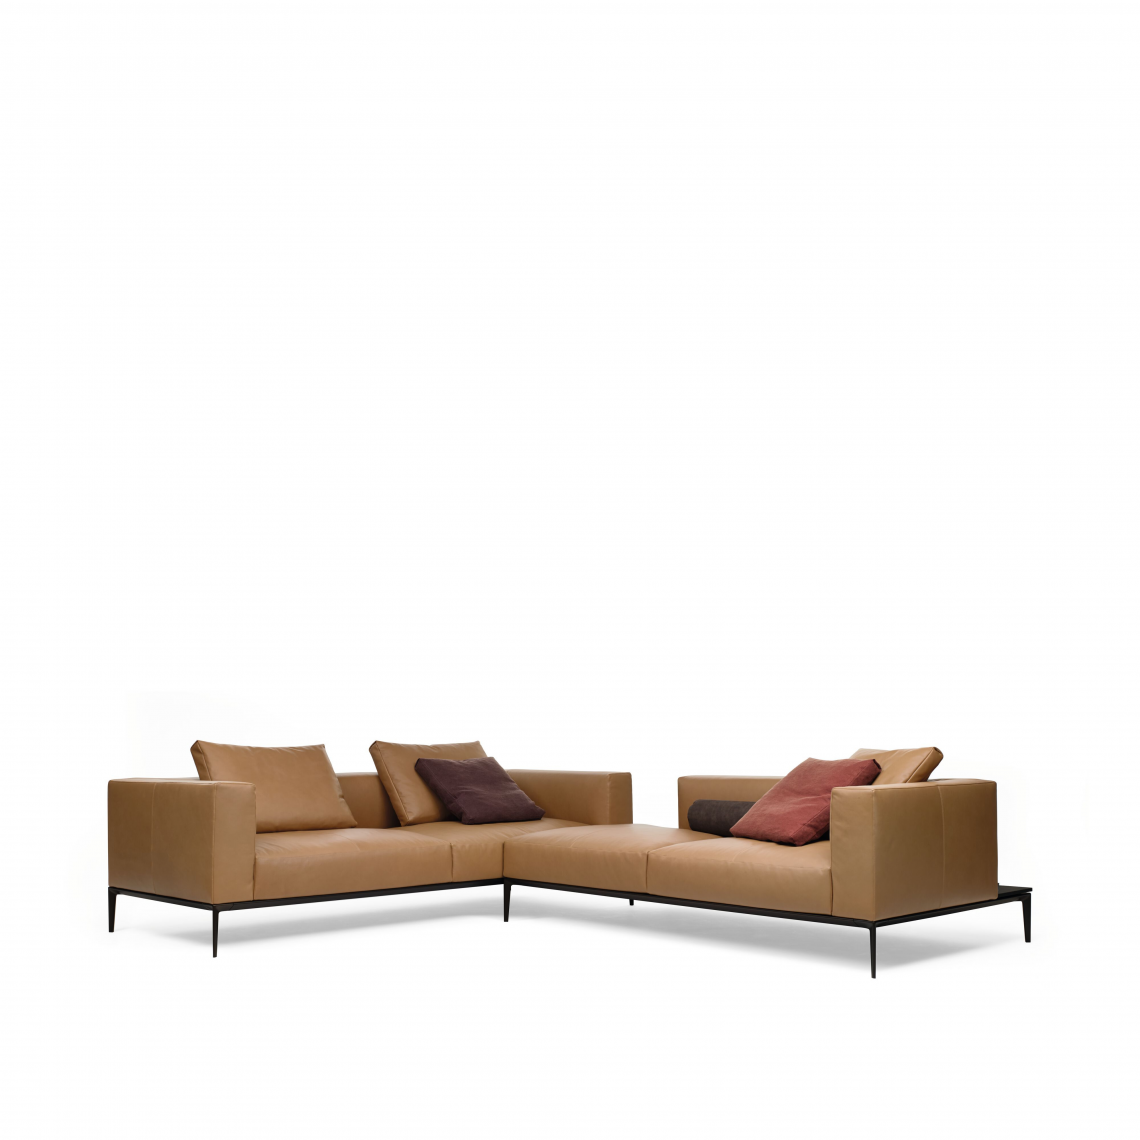 Jaan Living Sofa.组合沙发细节图2